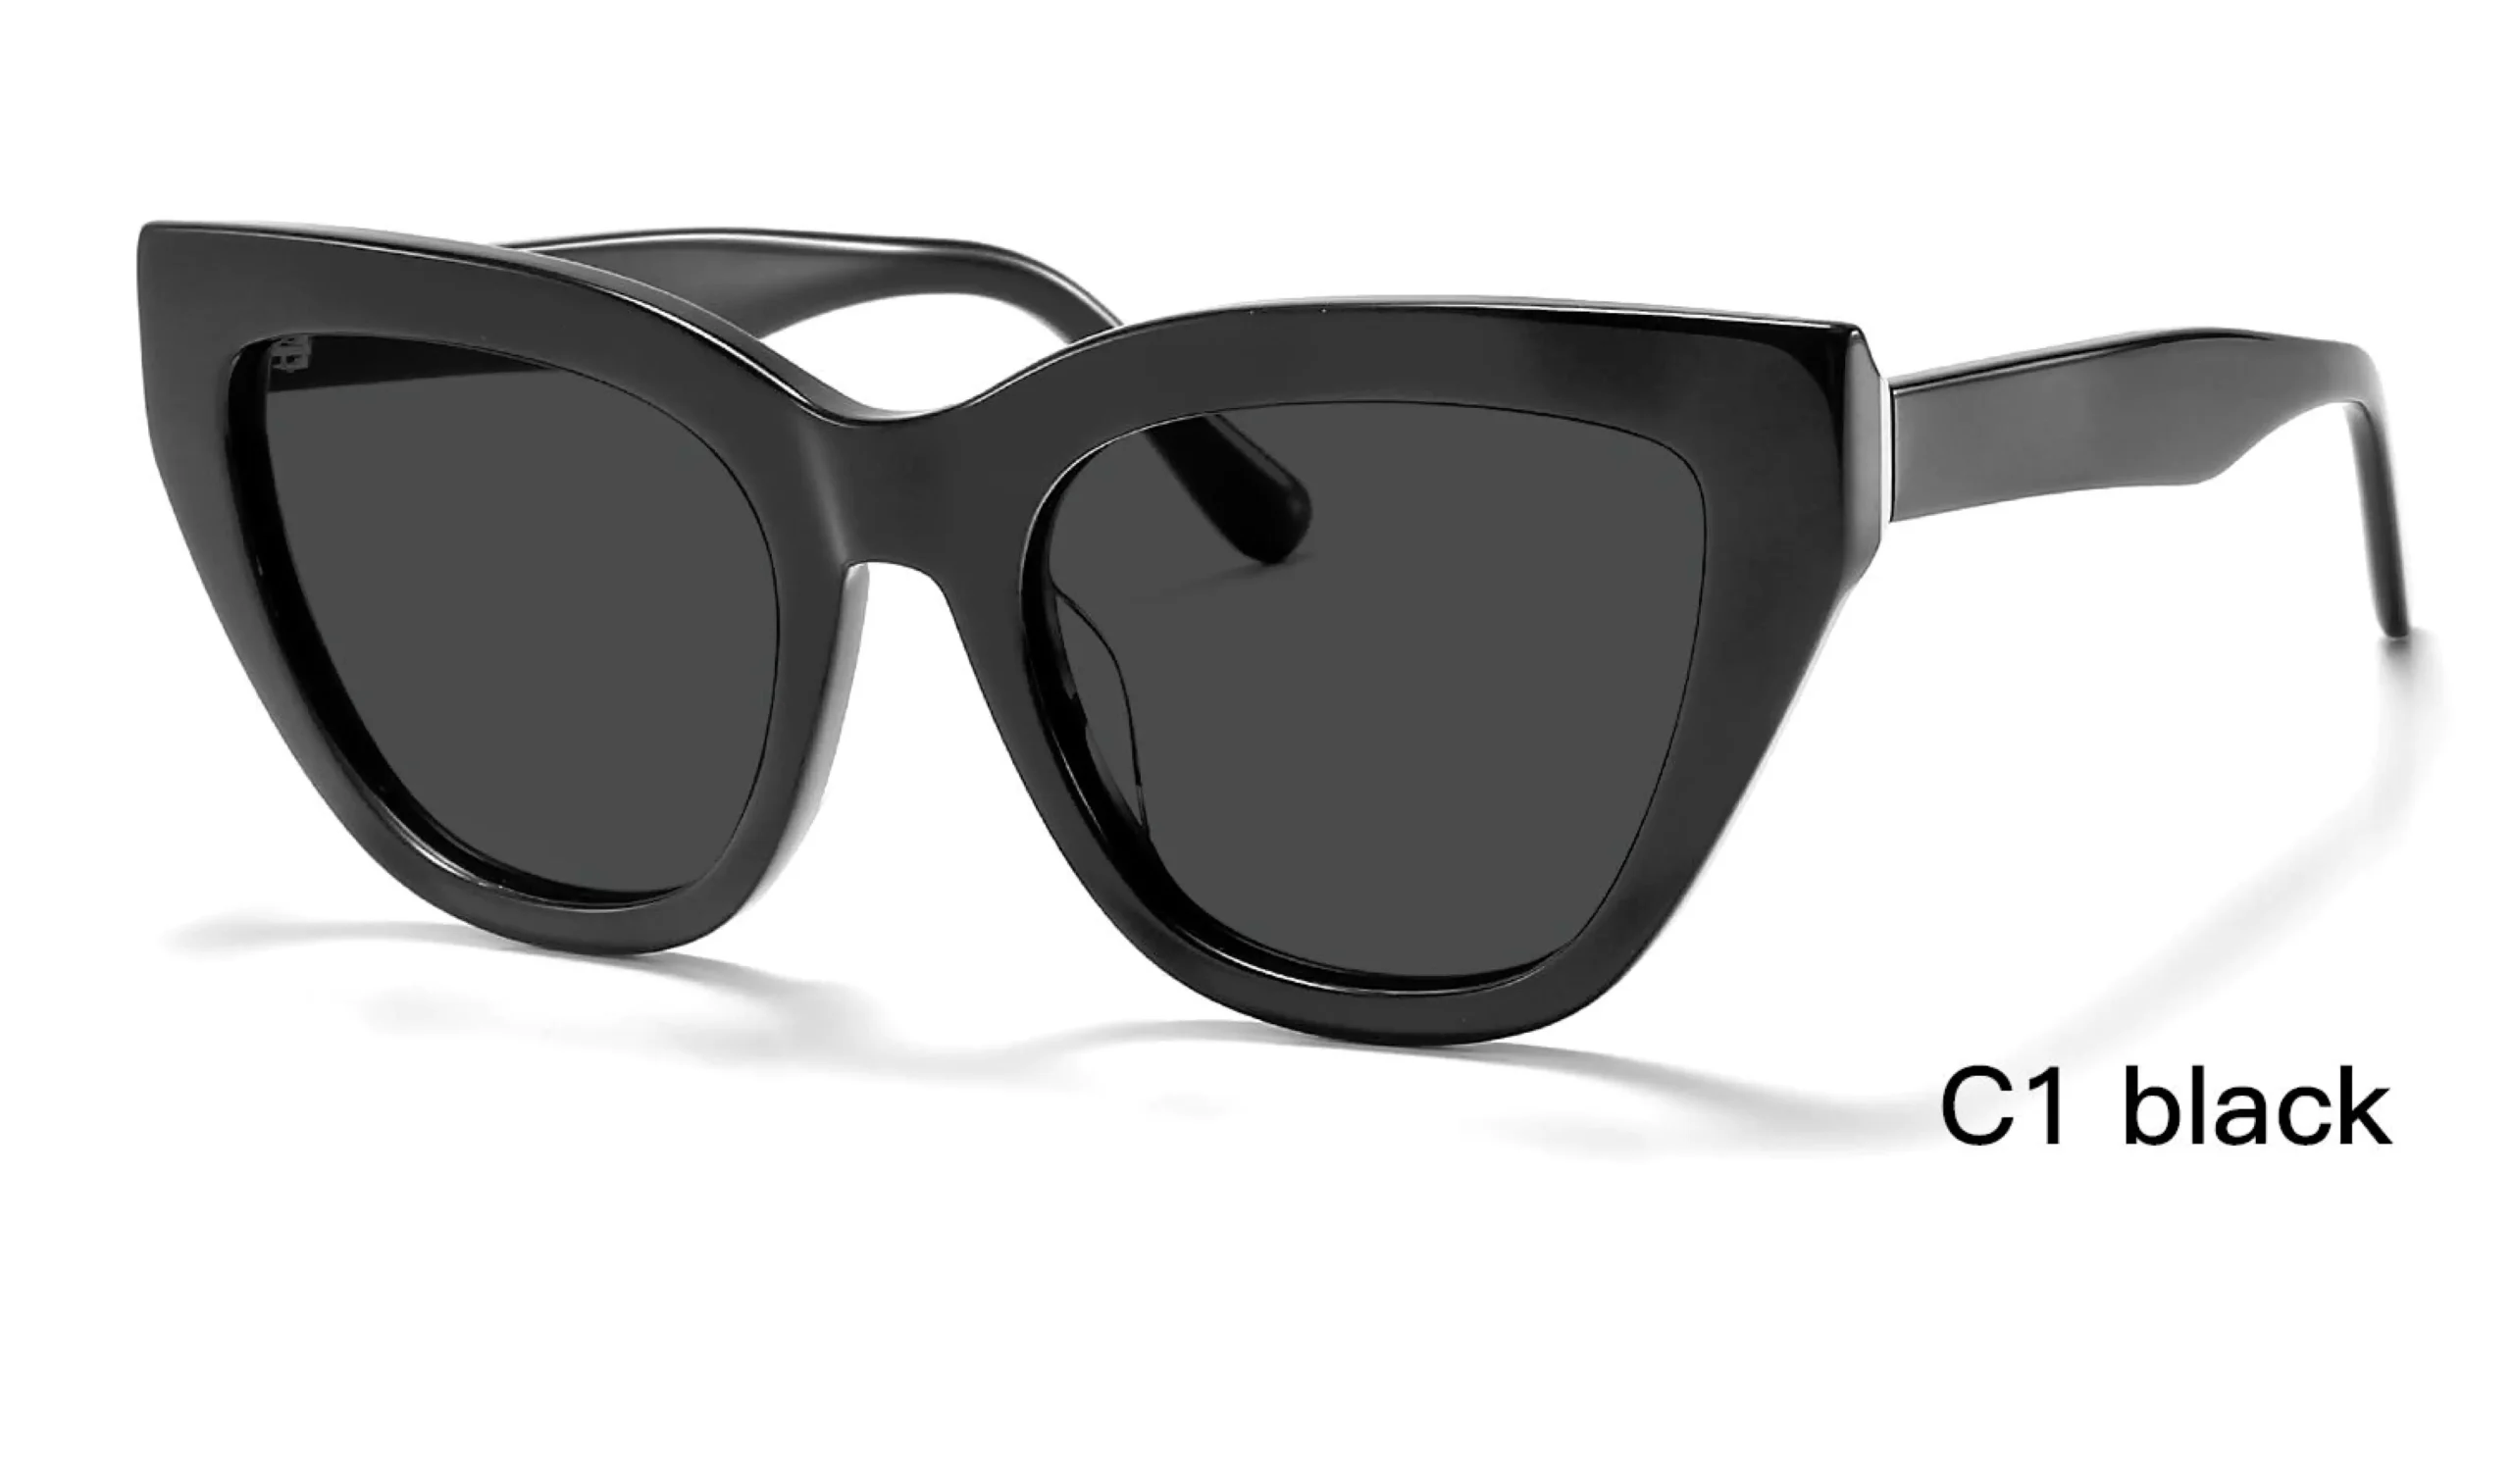 Wholesale Cat Eye Sunglasses, Black, UV protection, acetate sunglasses, low-cost sunglasses